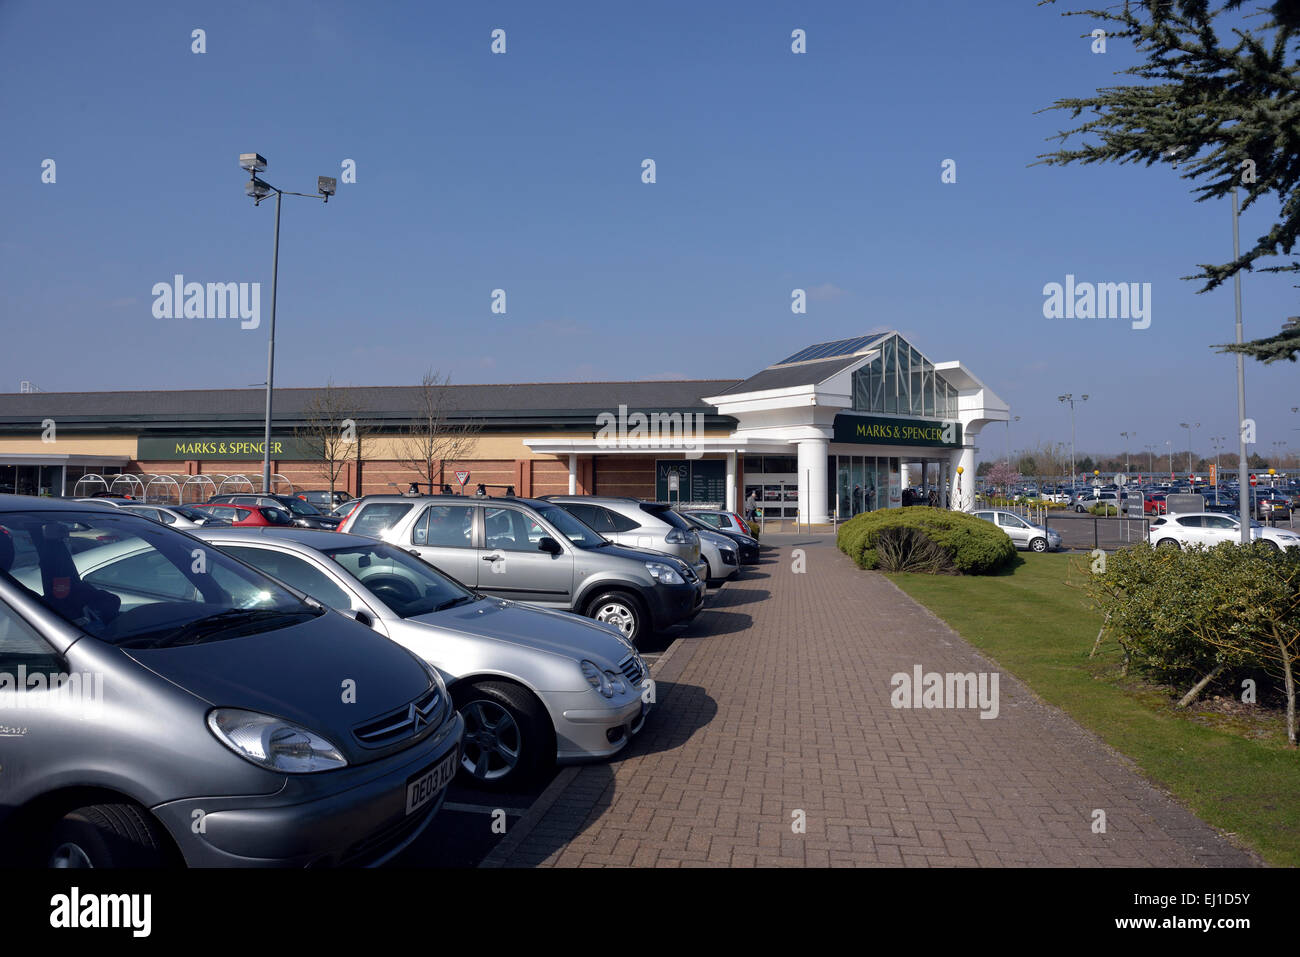 car parking at handforth dean shopping centre Stock Photo